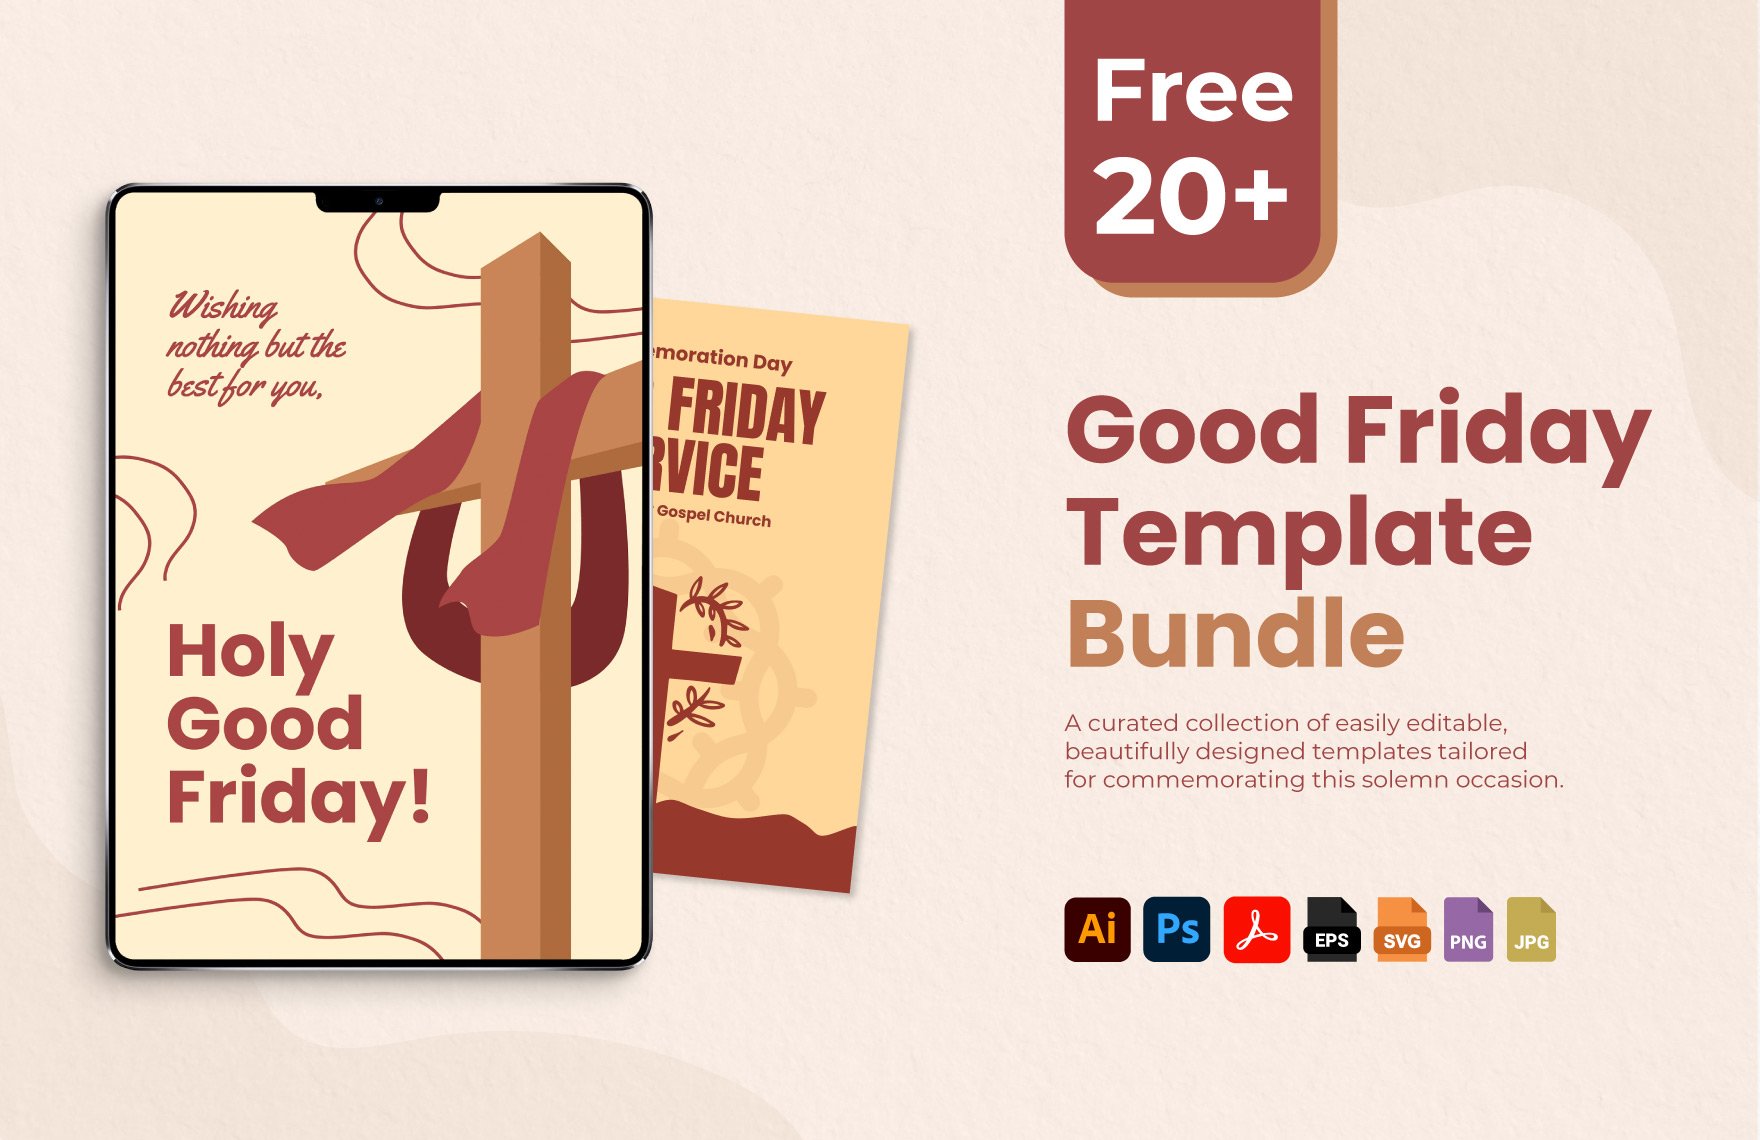 Free 20+ Good Friday Template Bundle in PDF, Illustrator, PSD, EPS, SVG, JPG, PNG